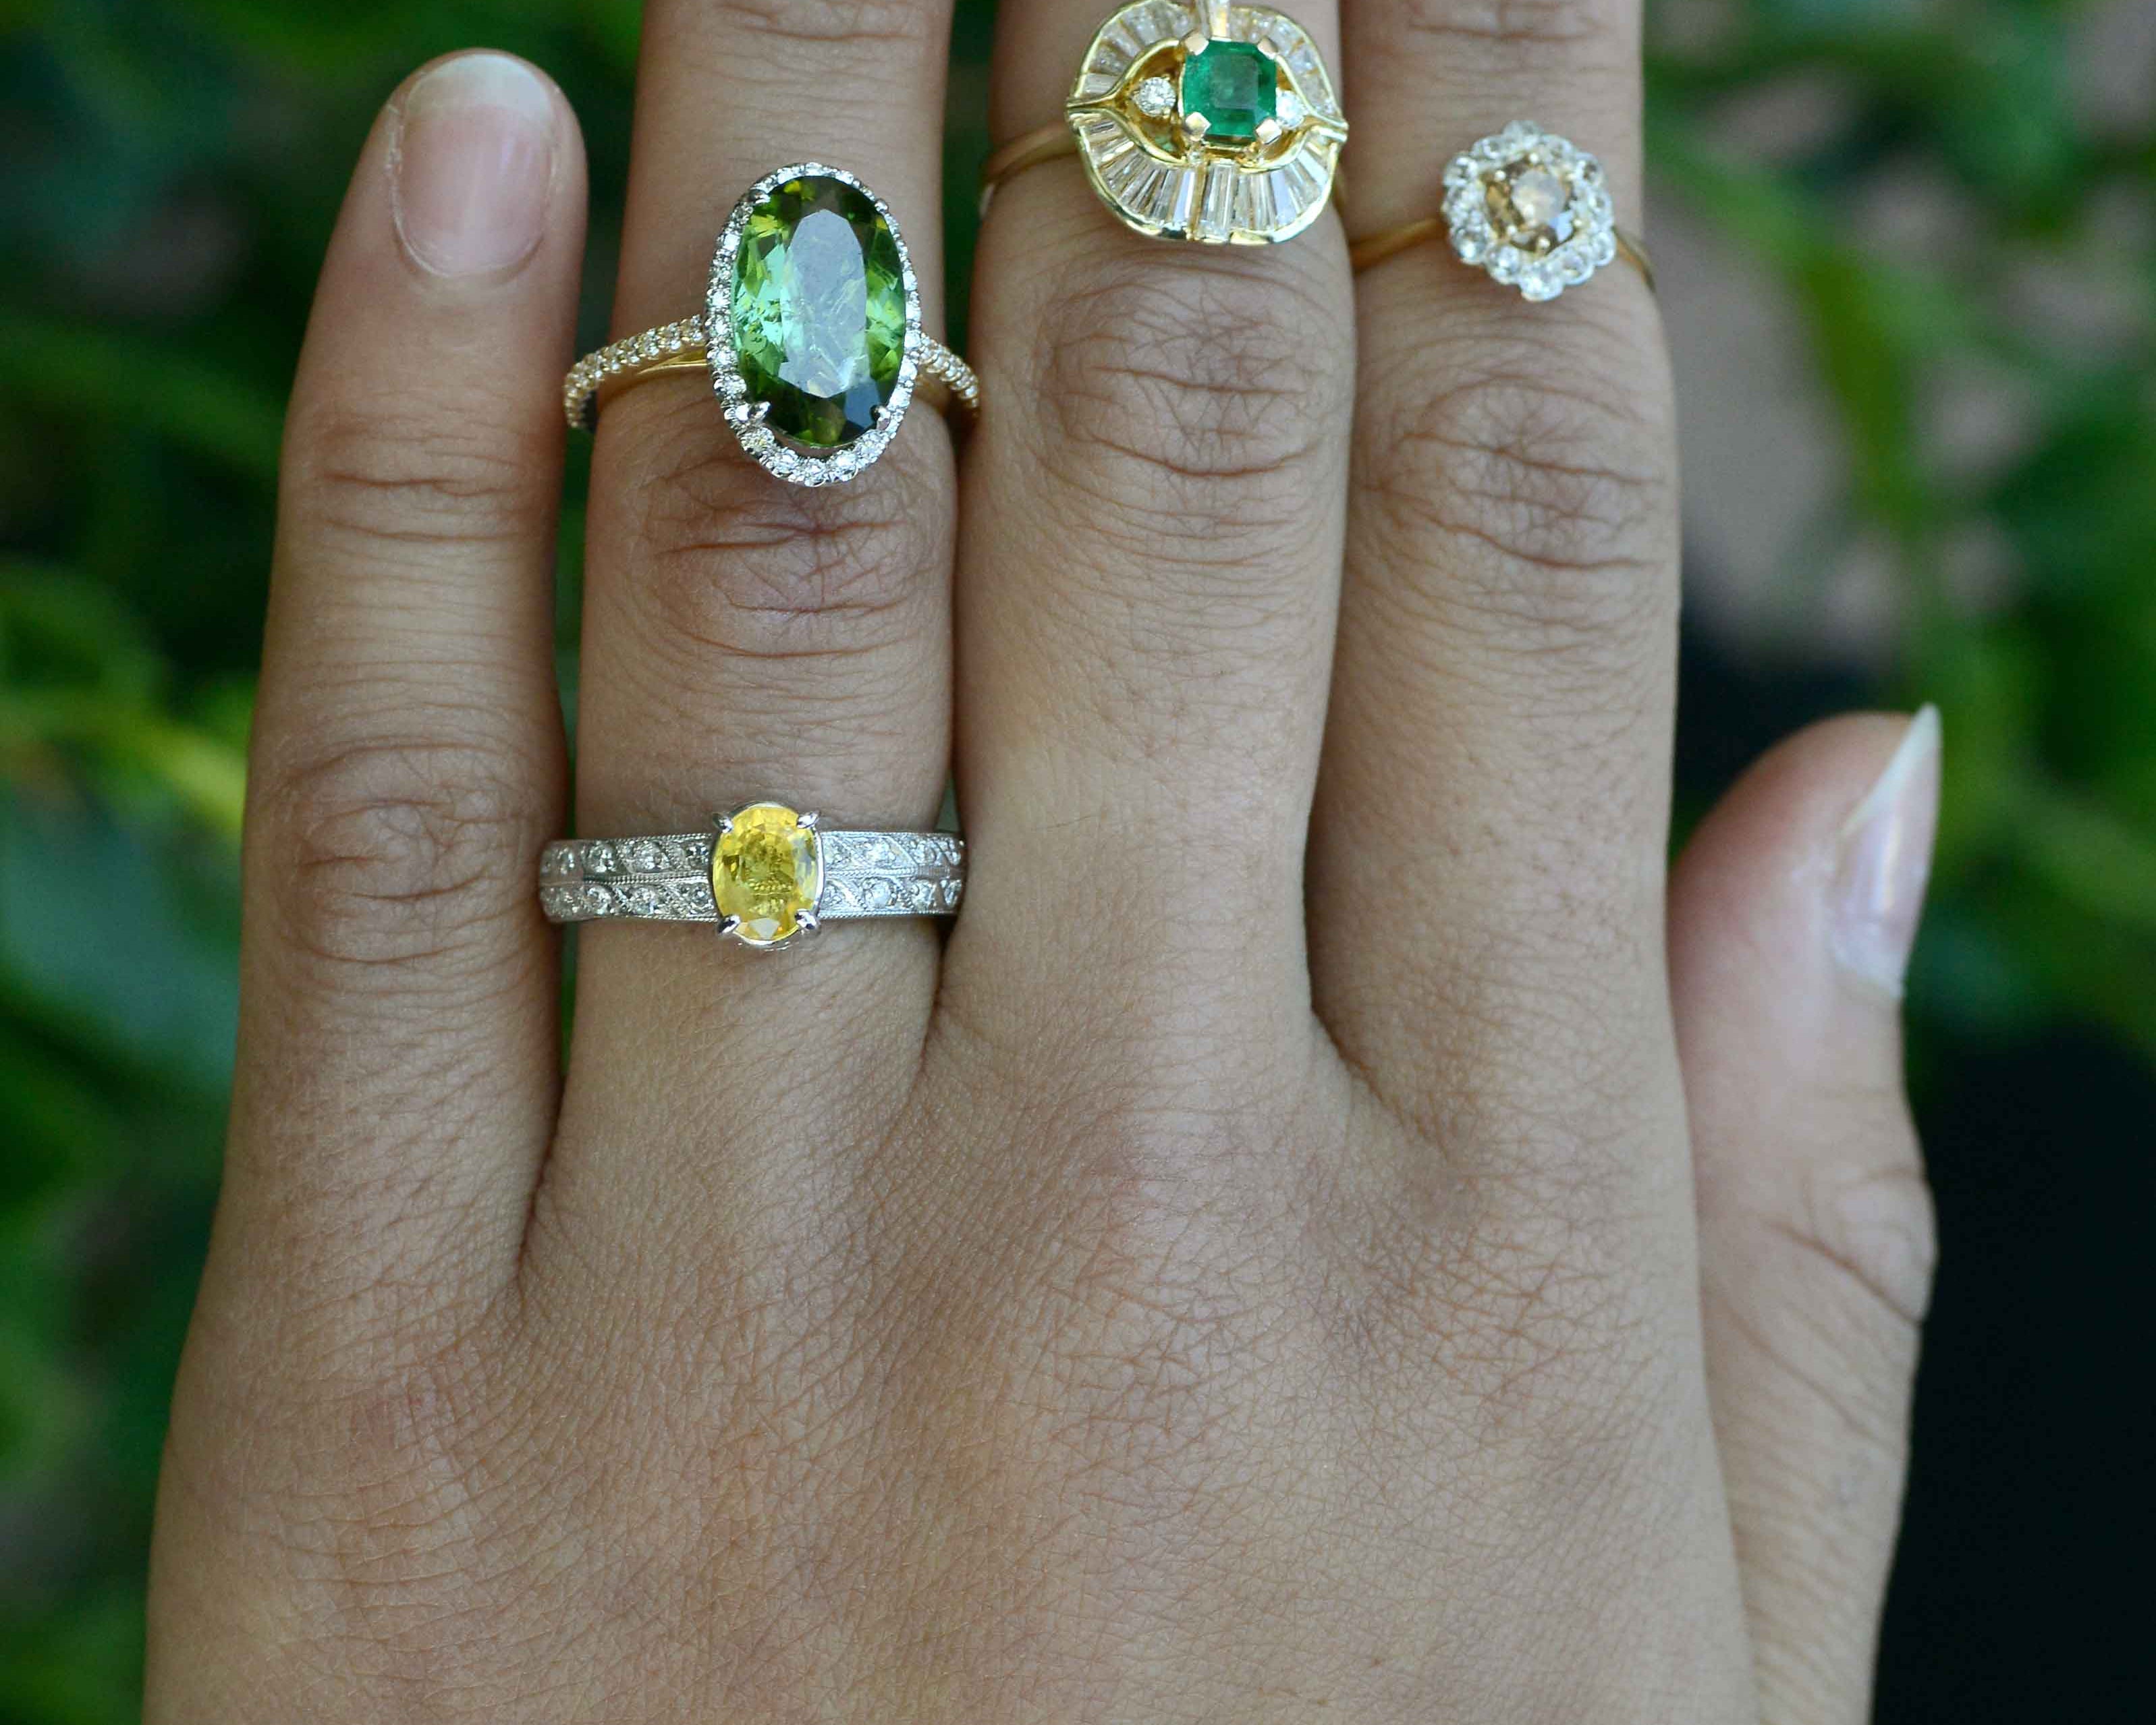 Vintage gemstone and diamond gold wedding rings.